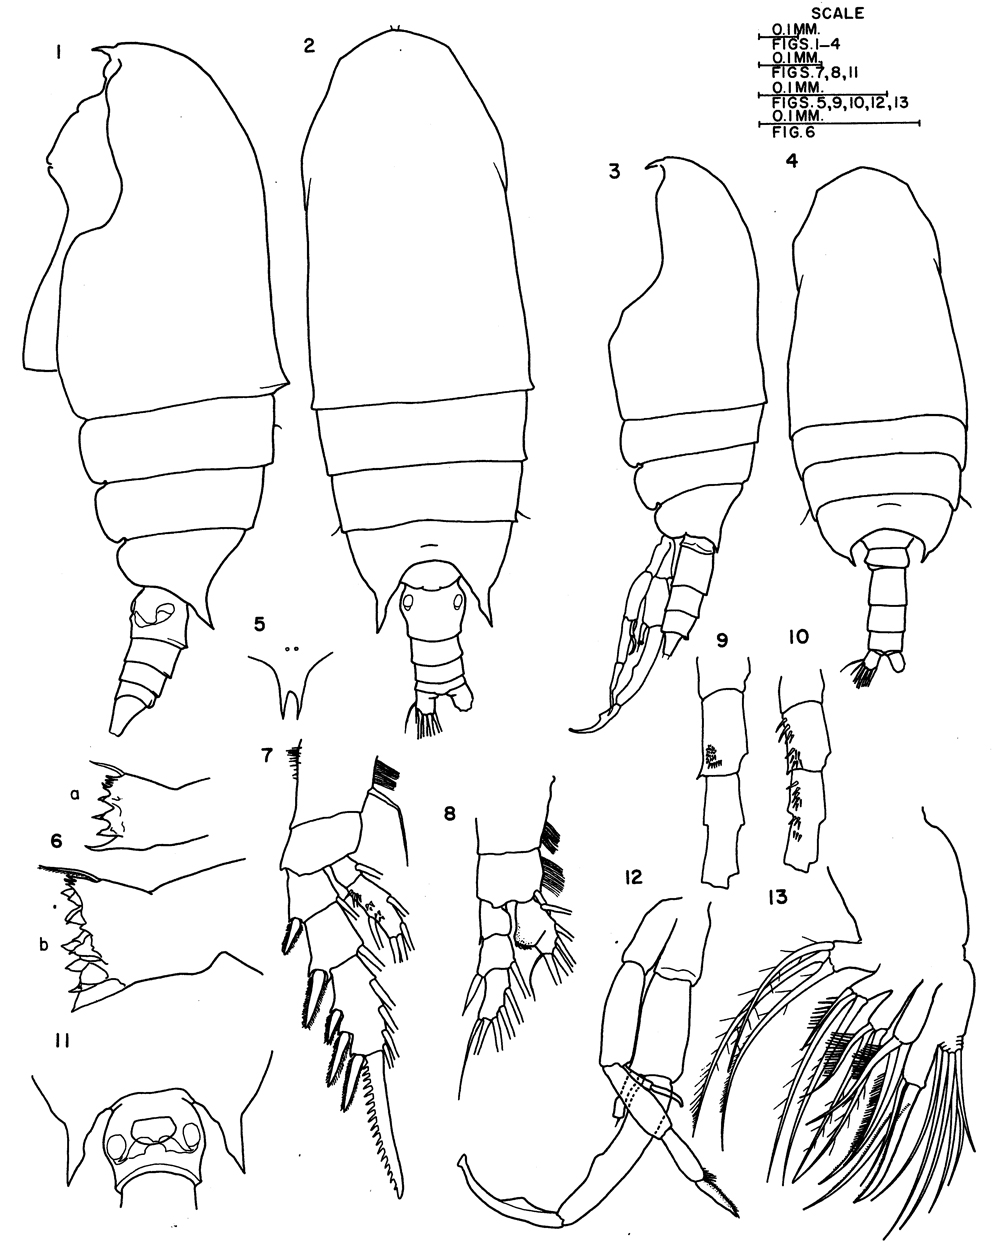 Species Bradyidius arnoldi - Plate 1 of morphological figures